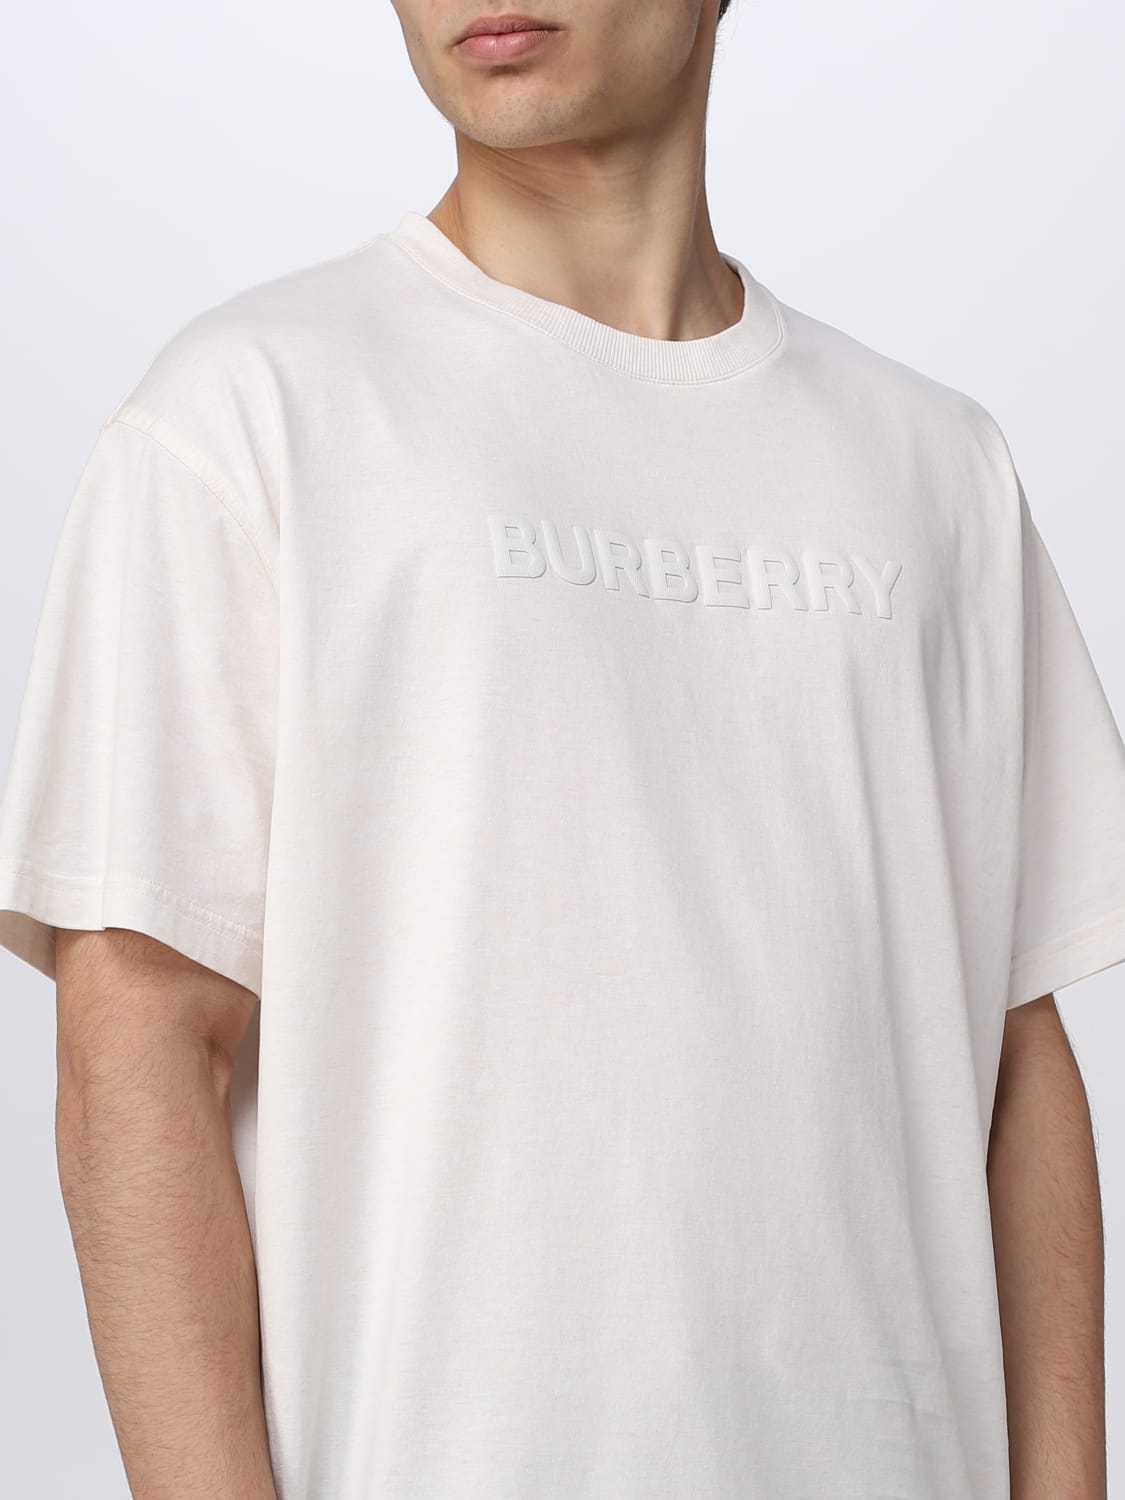 BURBERRY バーバリーTシャツ-